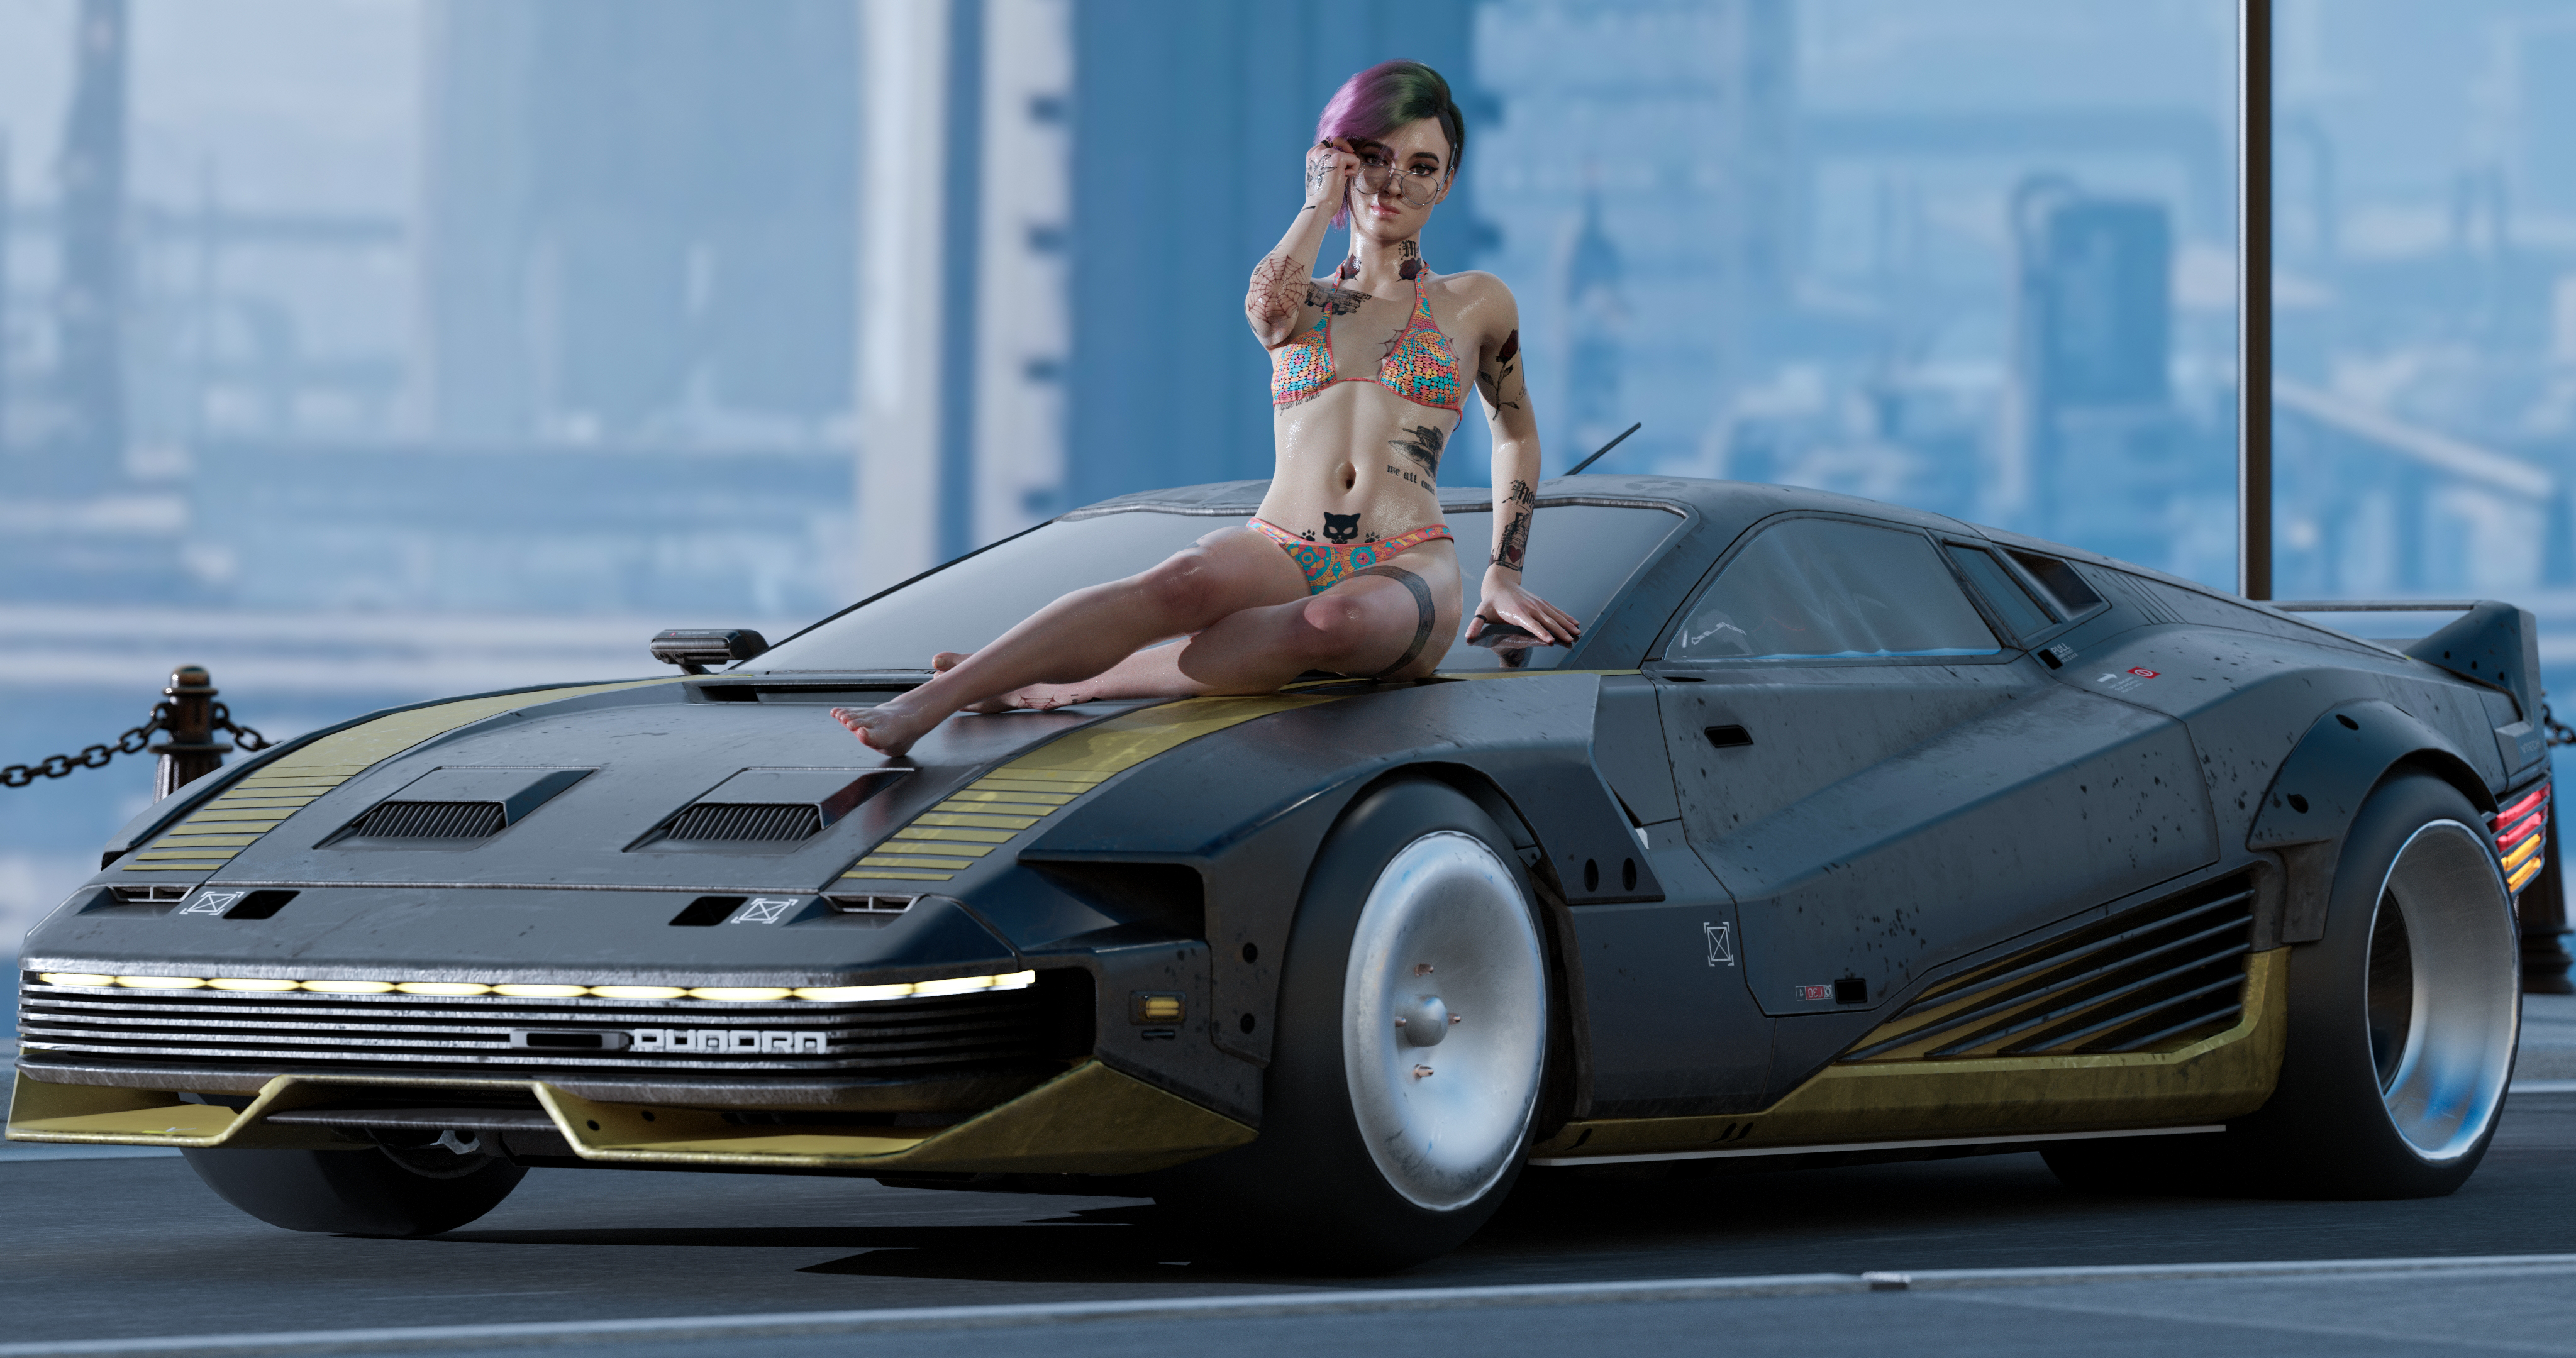 Cyberpunk car girl фото 101